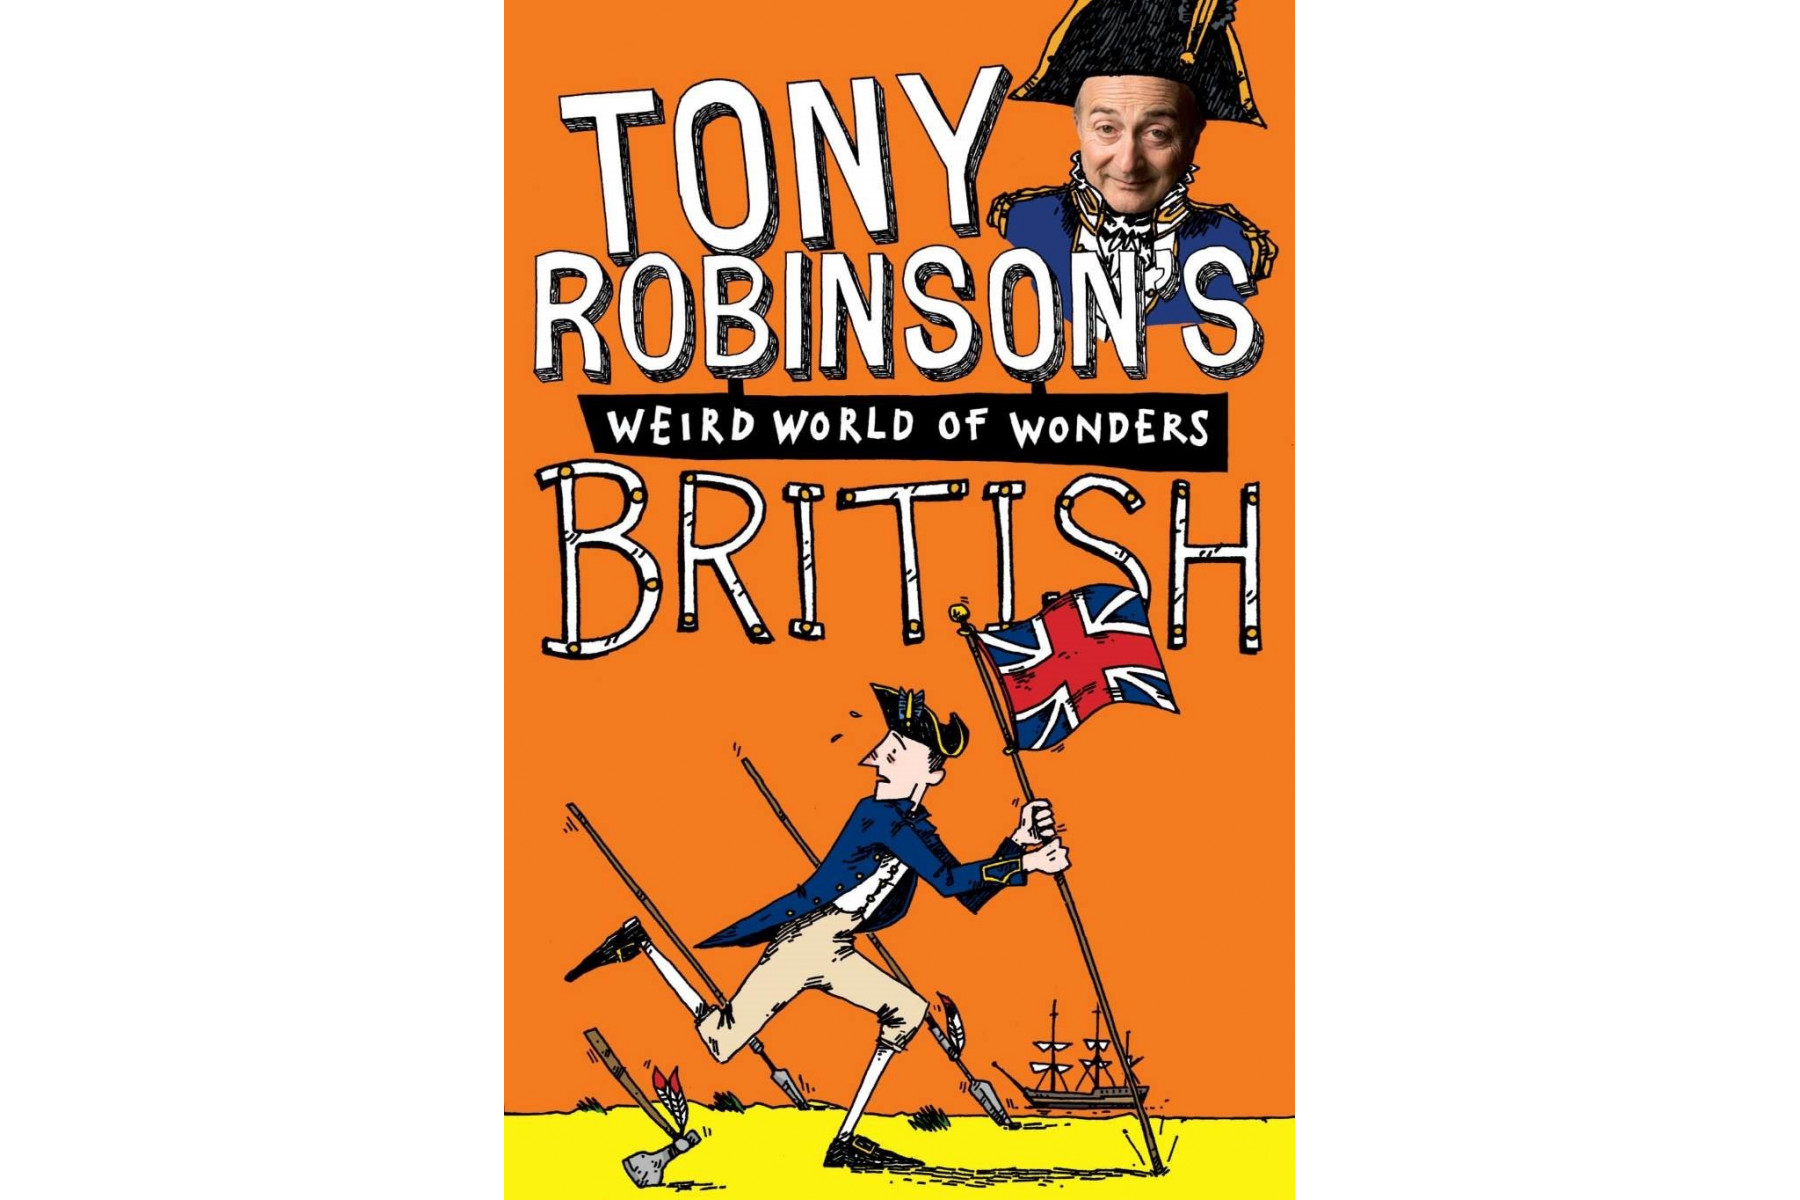 Tony Robinson's Weird World of Wonders! British